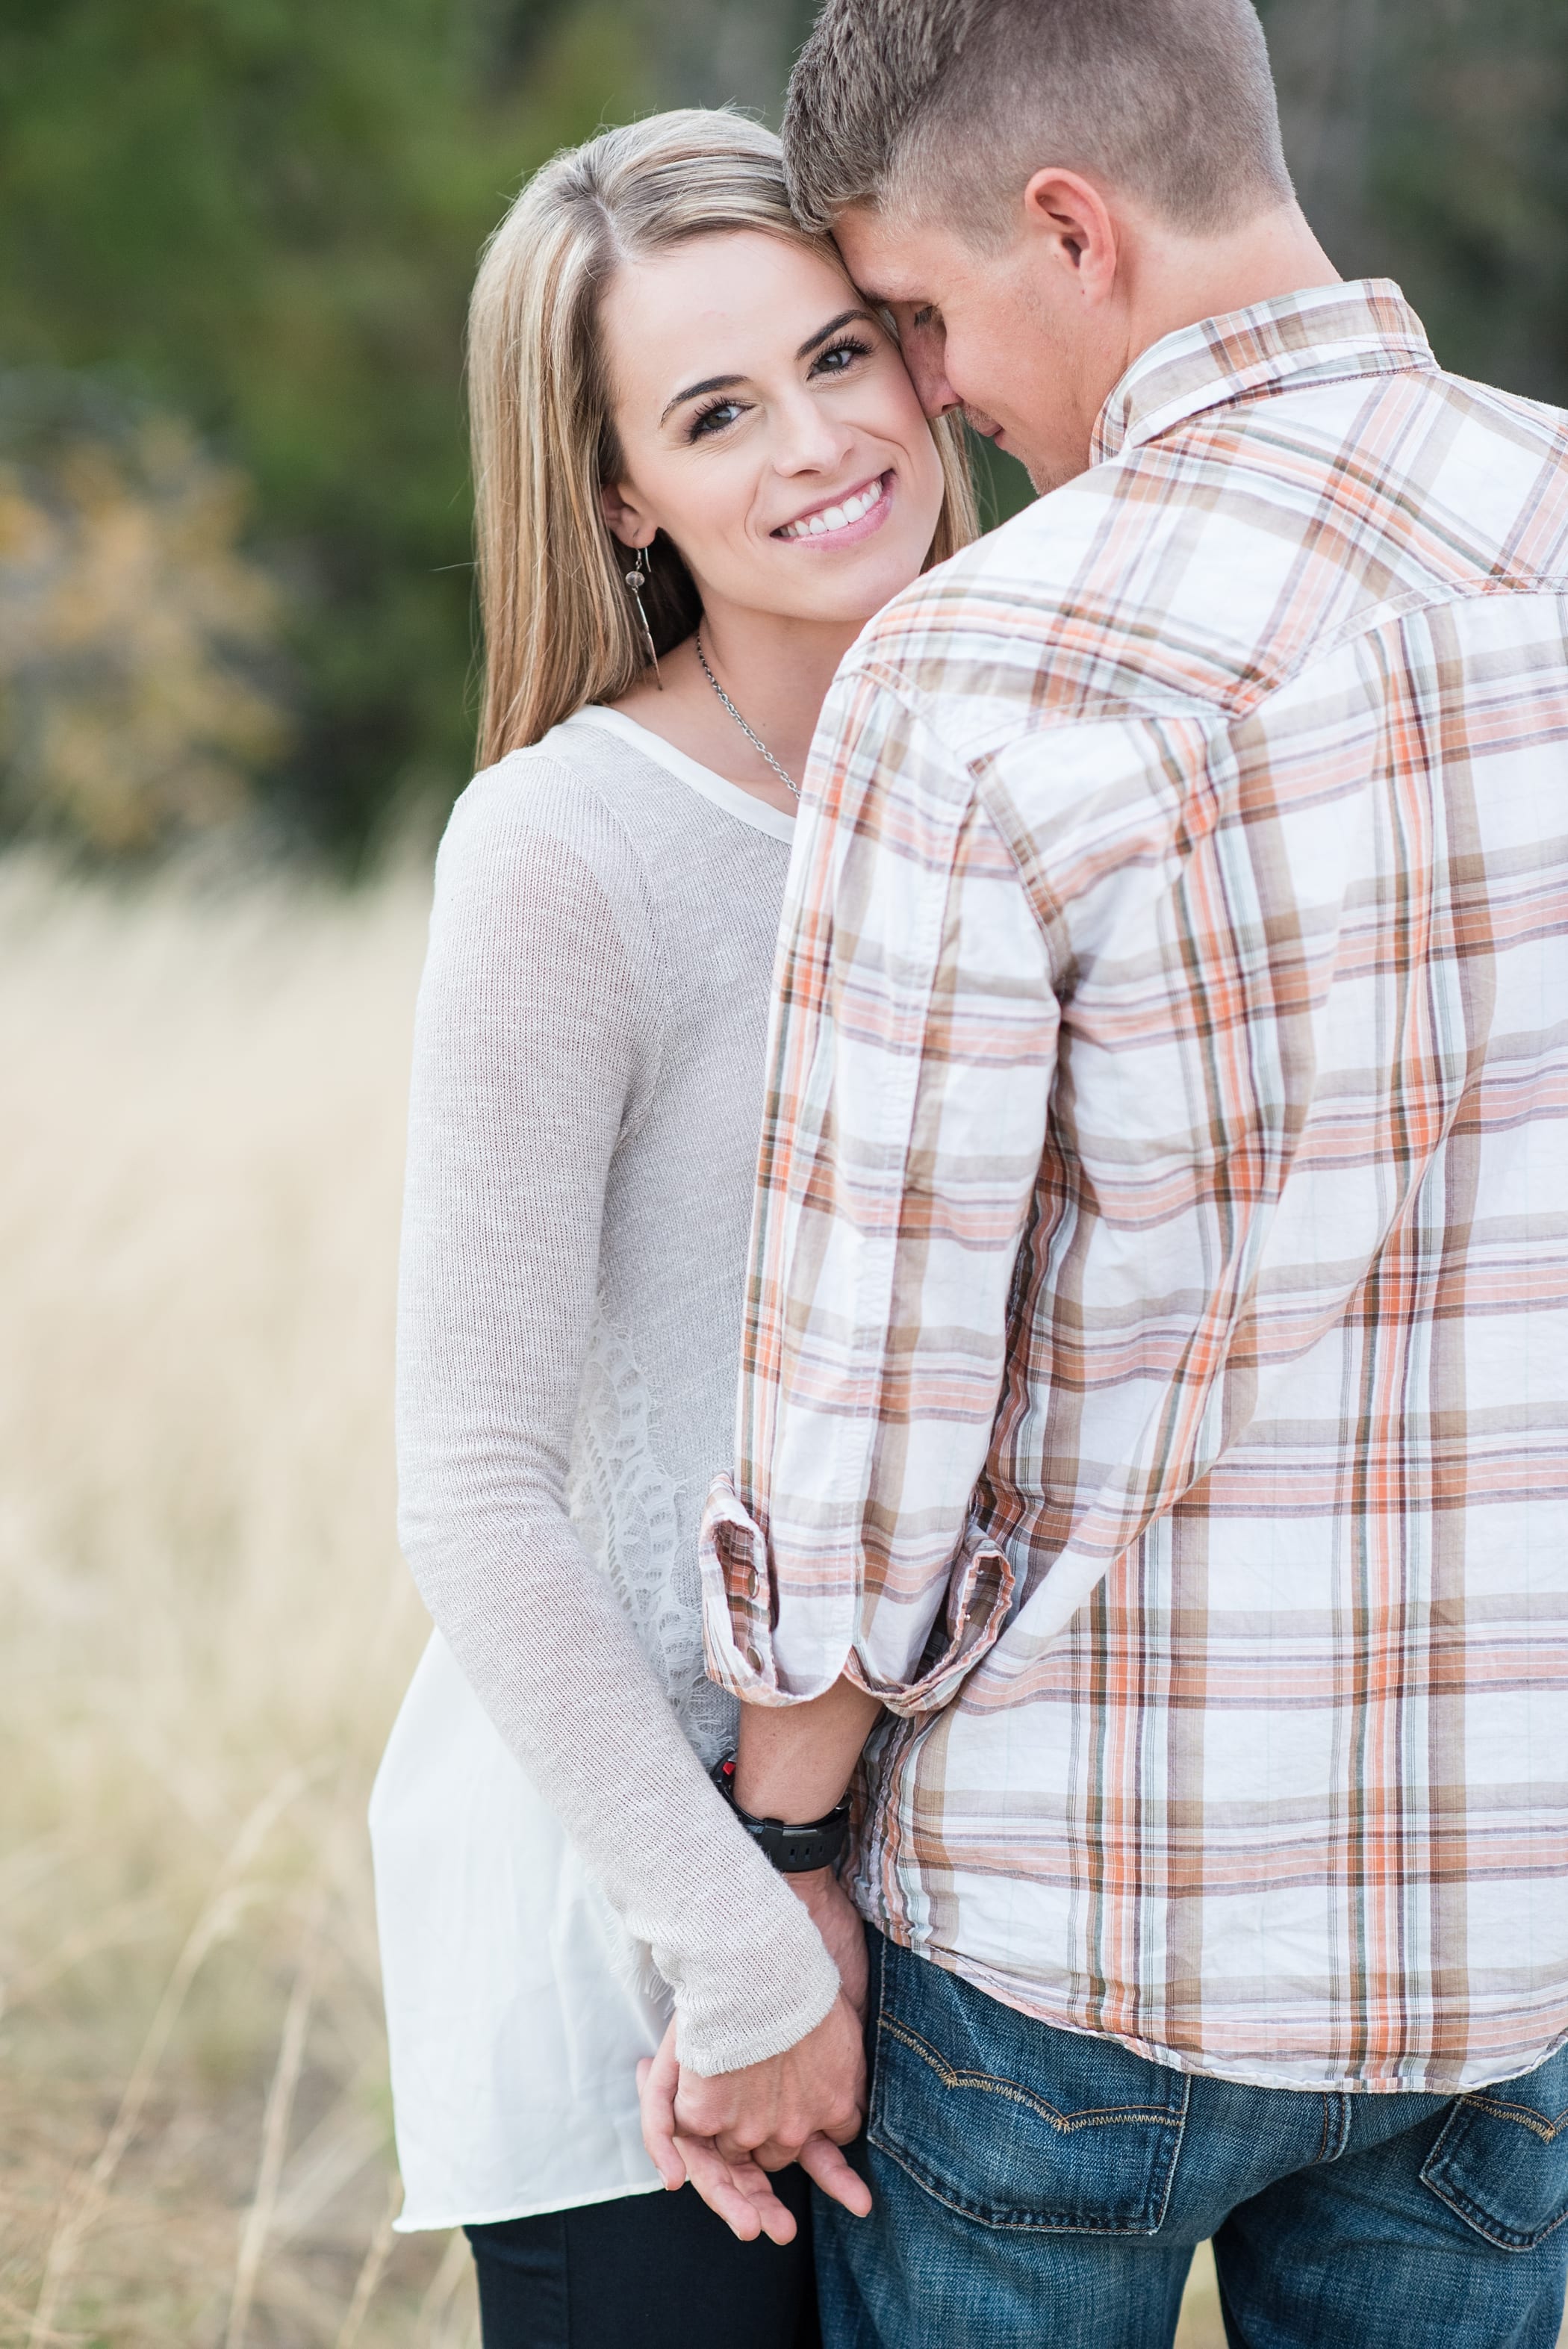 Idaho Falls Anniversary and Marriage Photographer • Michelle & Logan